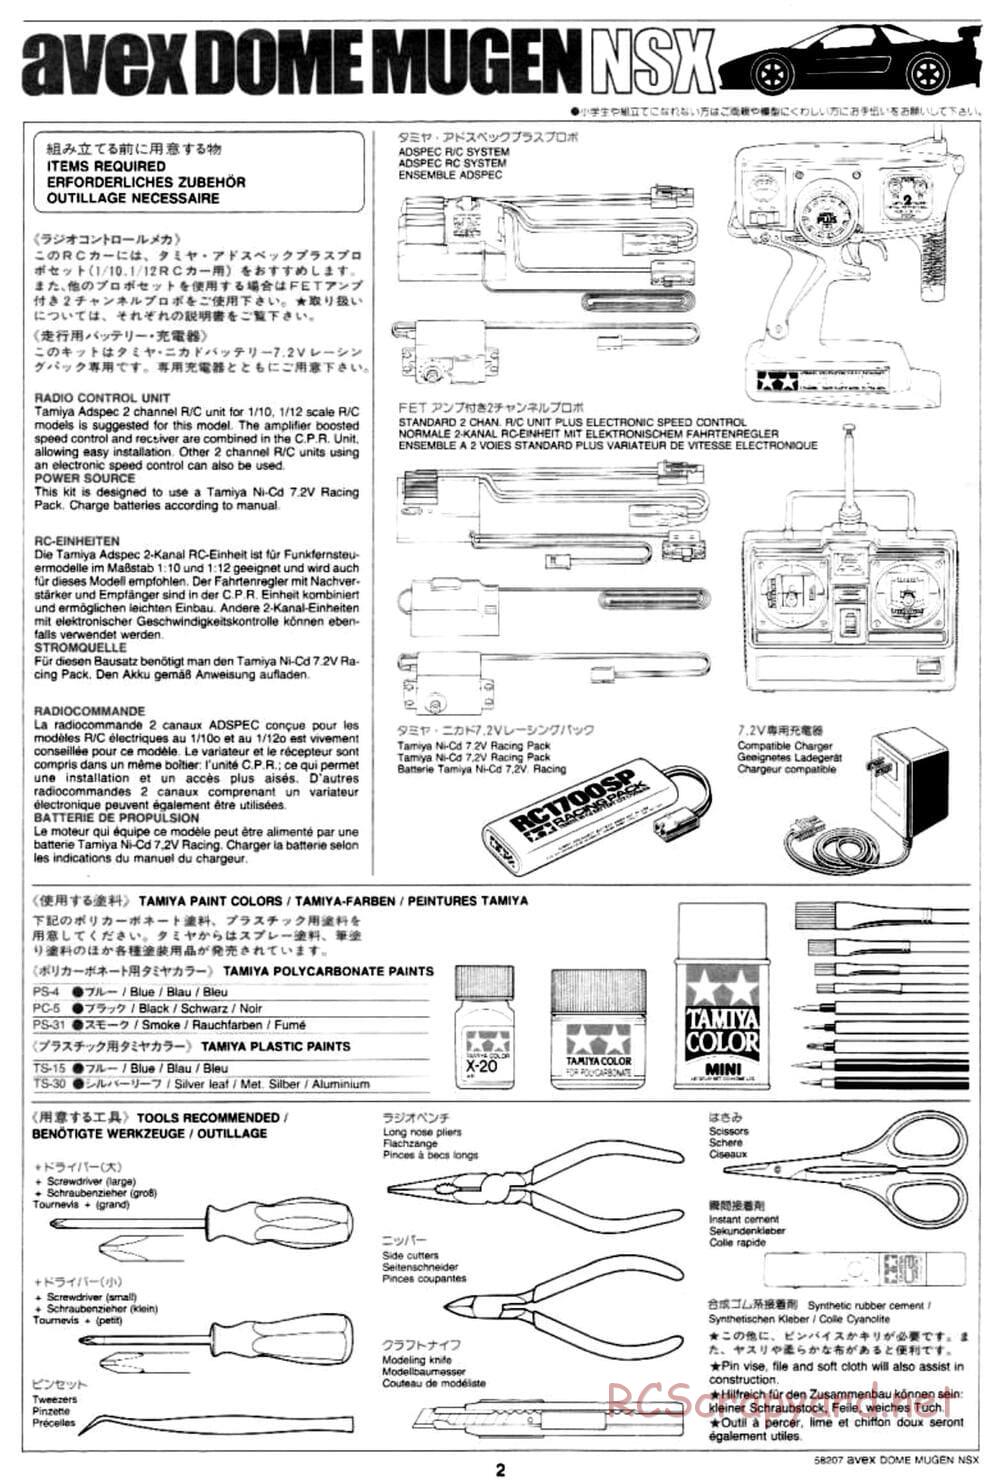 Tamiya - Avex Dome Mugen NSX - TA-03R Chassis - Manual - Page 2